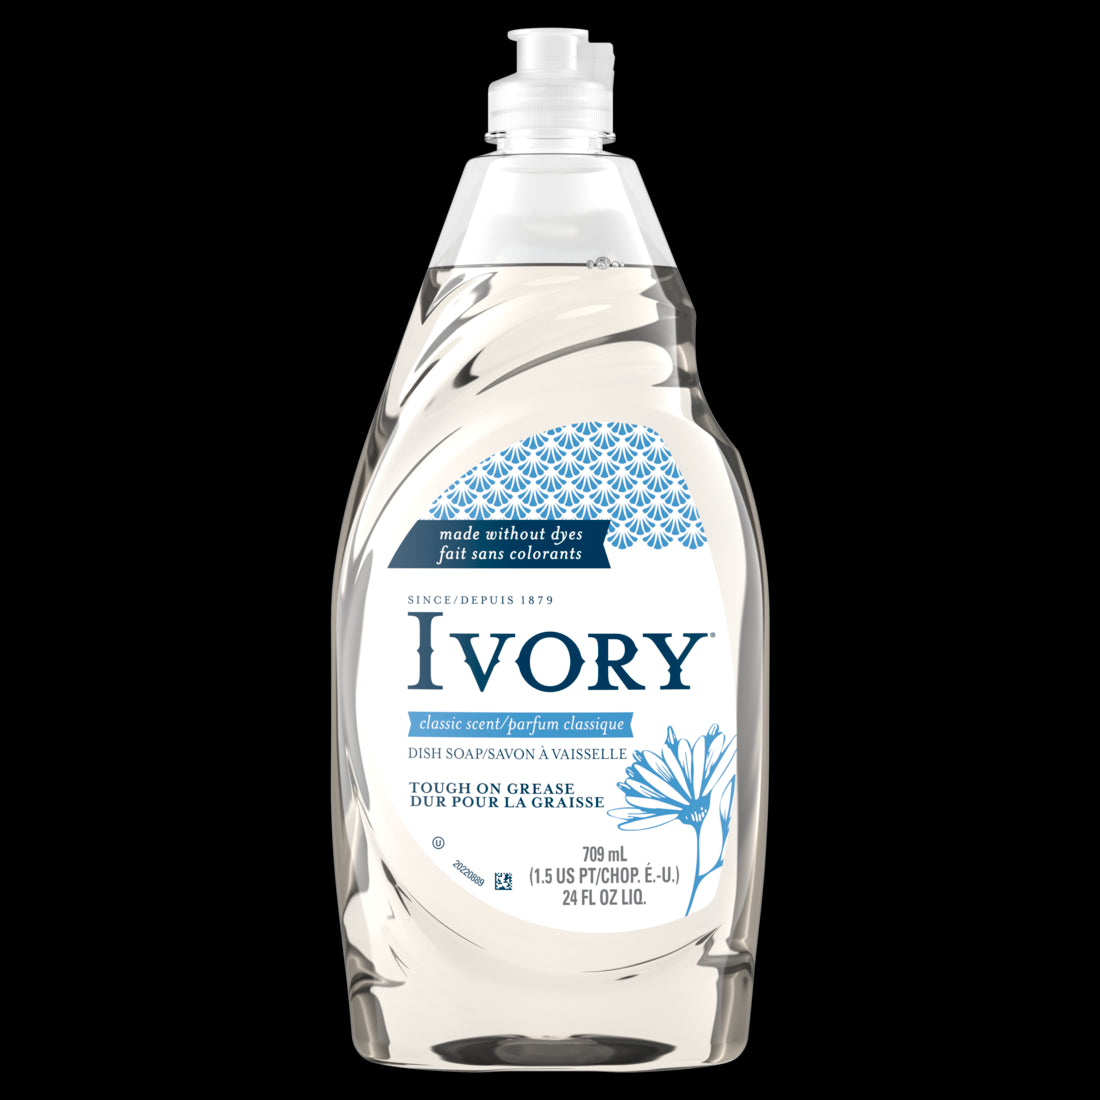 Ivory Ultra Classic Scent Dishwashing Liquid - 24oz/10pk